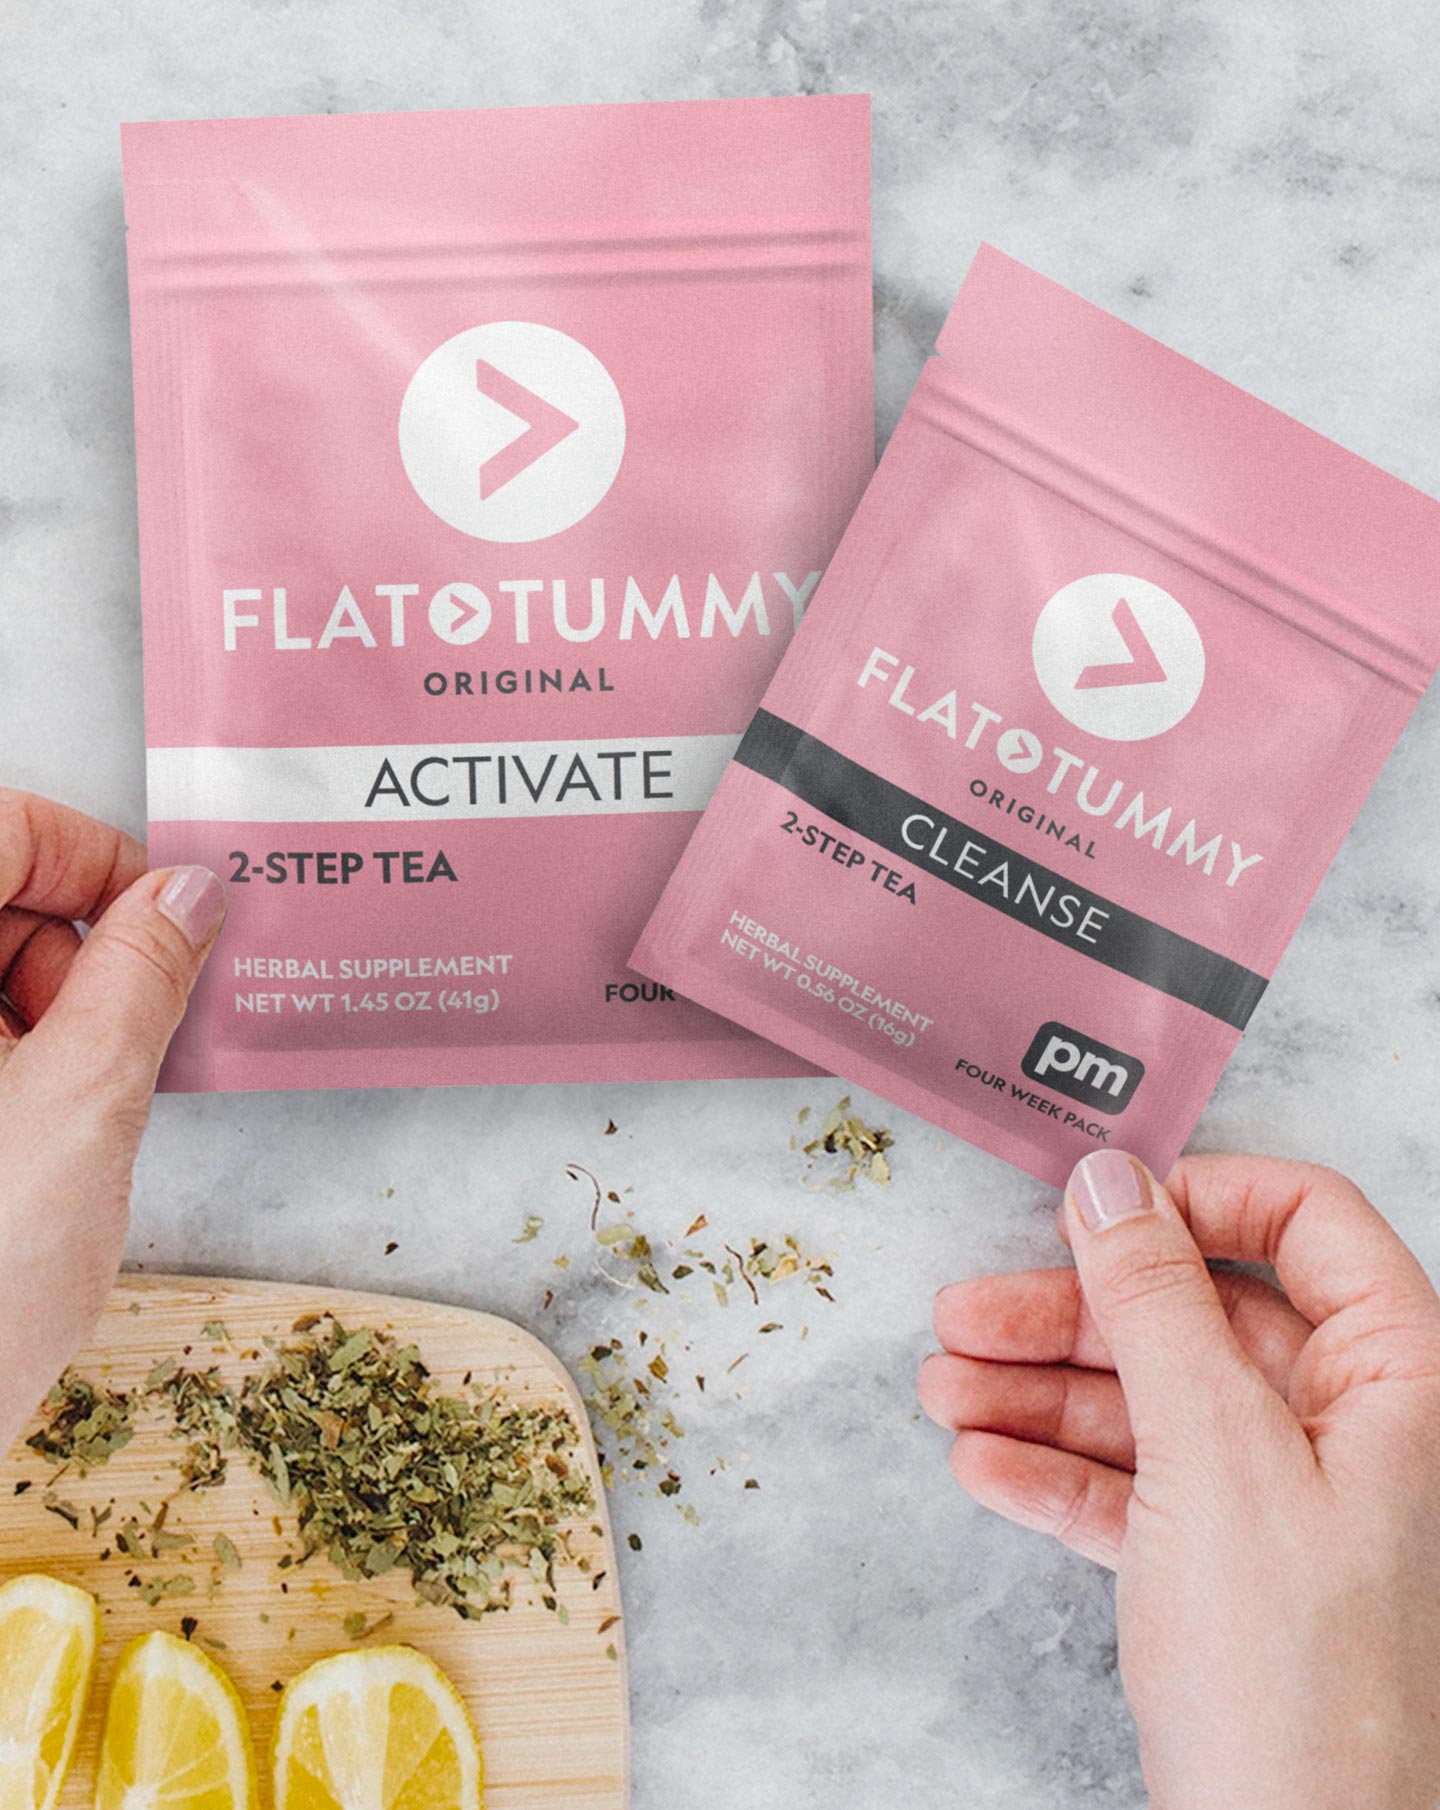 #1 Original Flat Tummy Detox Tea - Cleanse & Activate